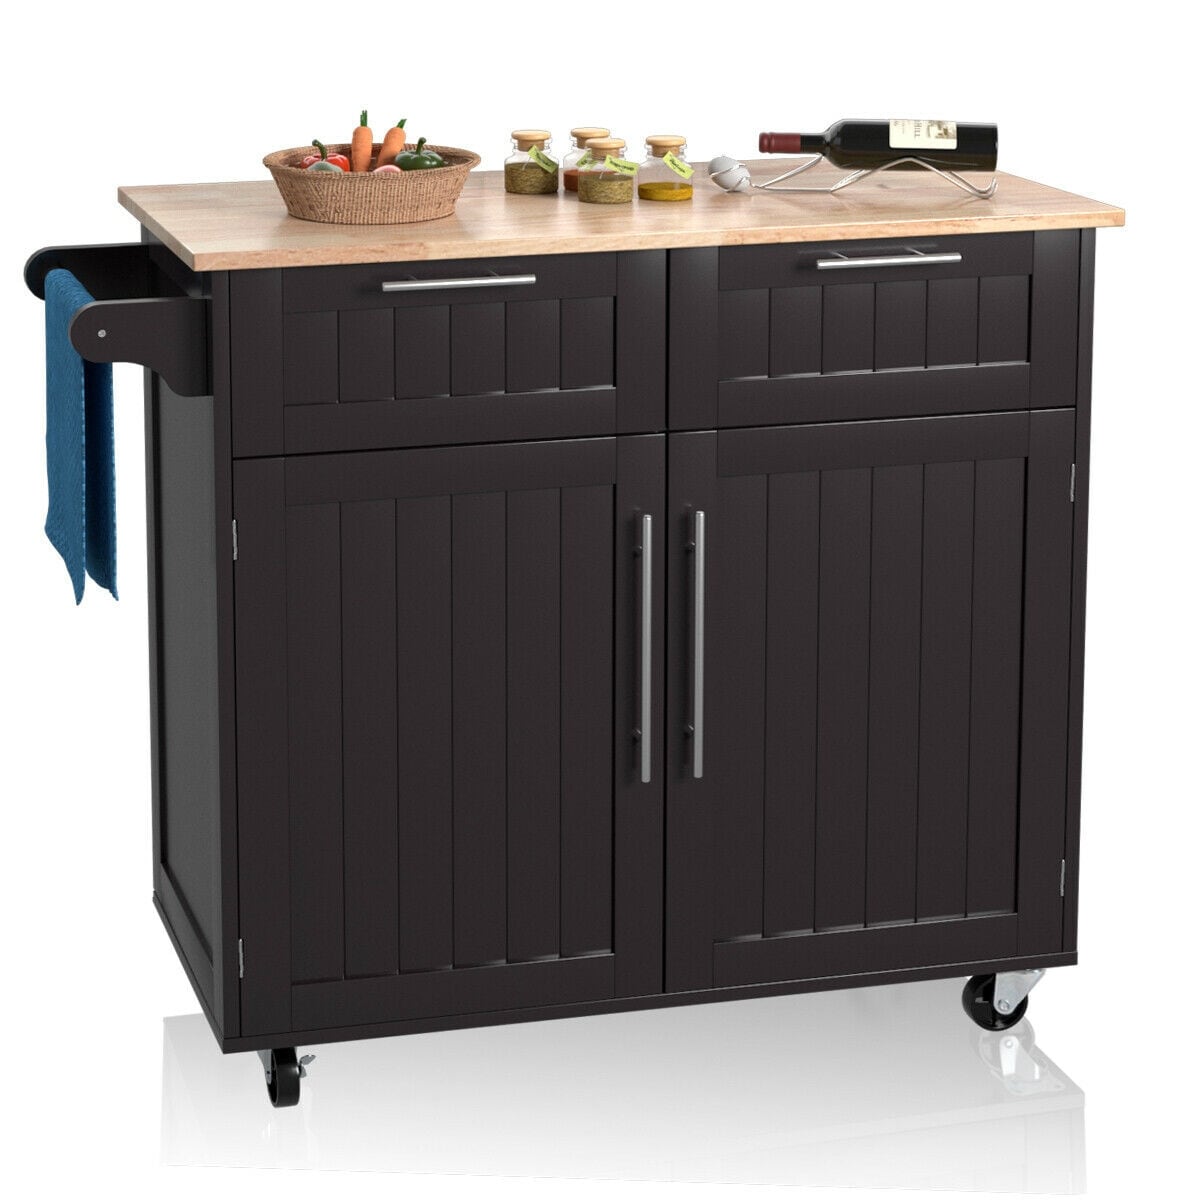 Costway Rolling Kitchen Cart Island Heavy Duty Storage Trolley Cabinet See Details On Sale Overstock 18022450